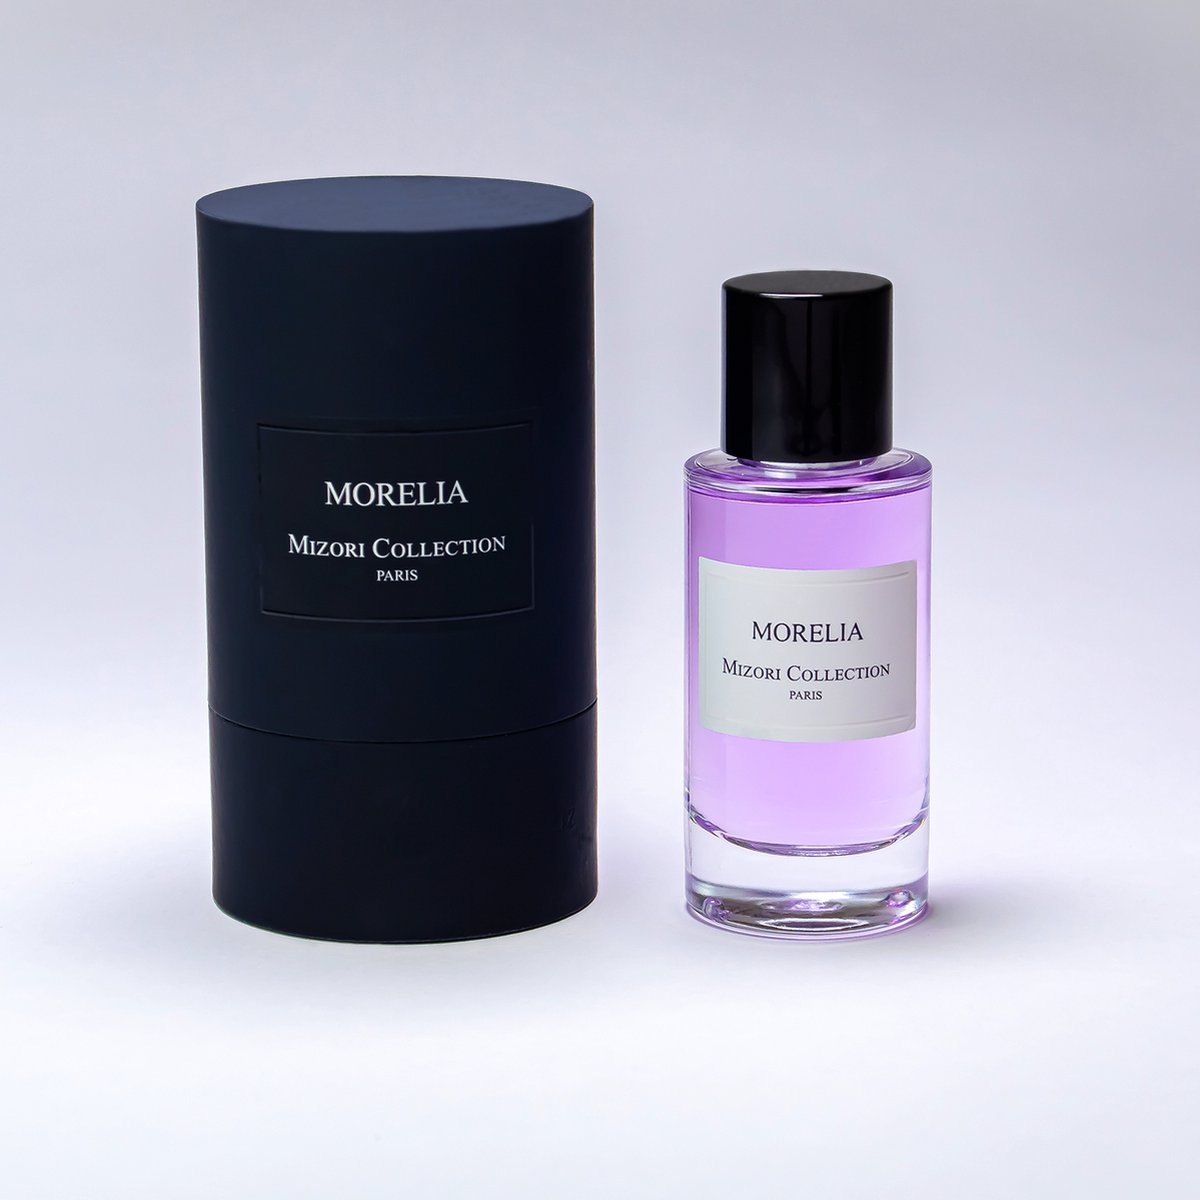 Morelia - Mizori Collection Paris - High Exclusive Perfume - Eau de Parfum - 50 ml - Niche Perfume